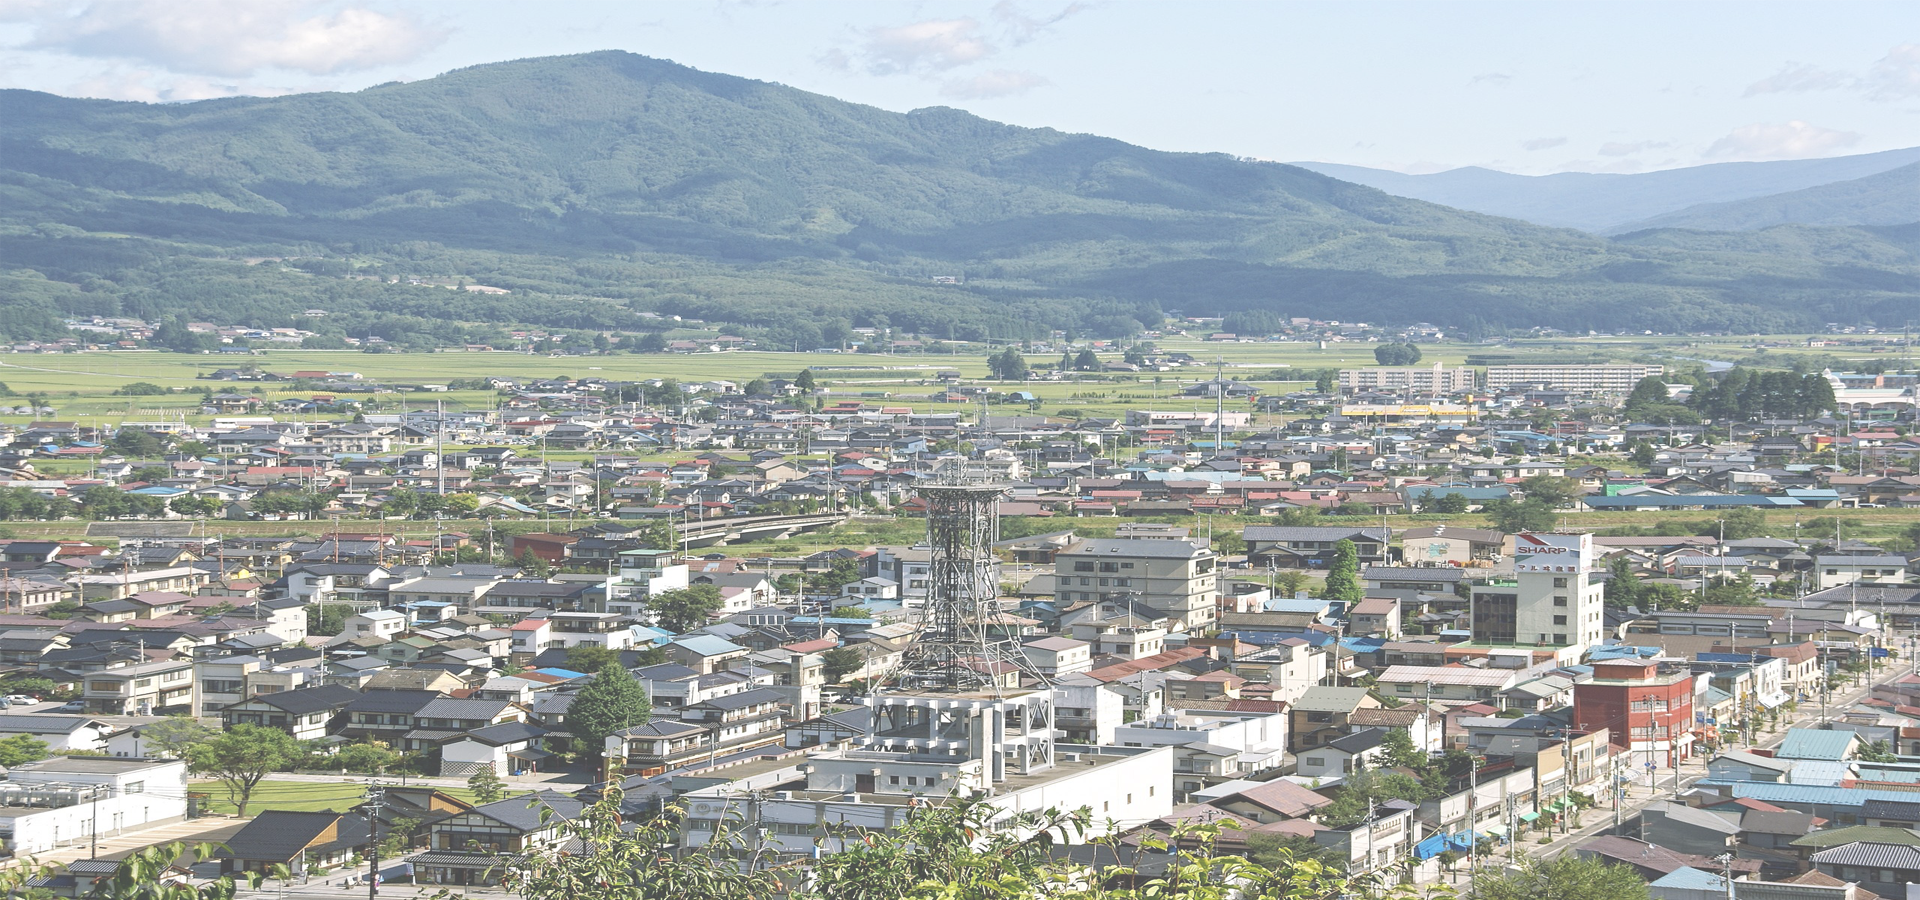 <b>Tōno, Iwate Prefecture, Tōhoku Region, Japan</b>